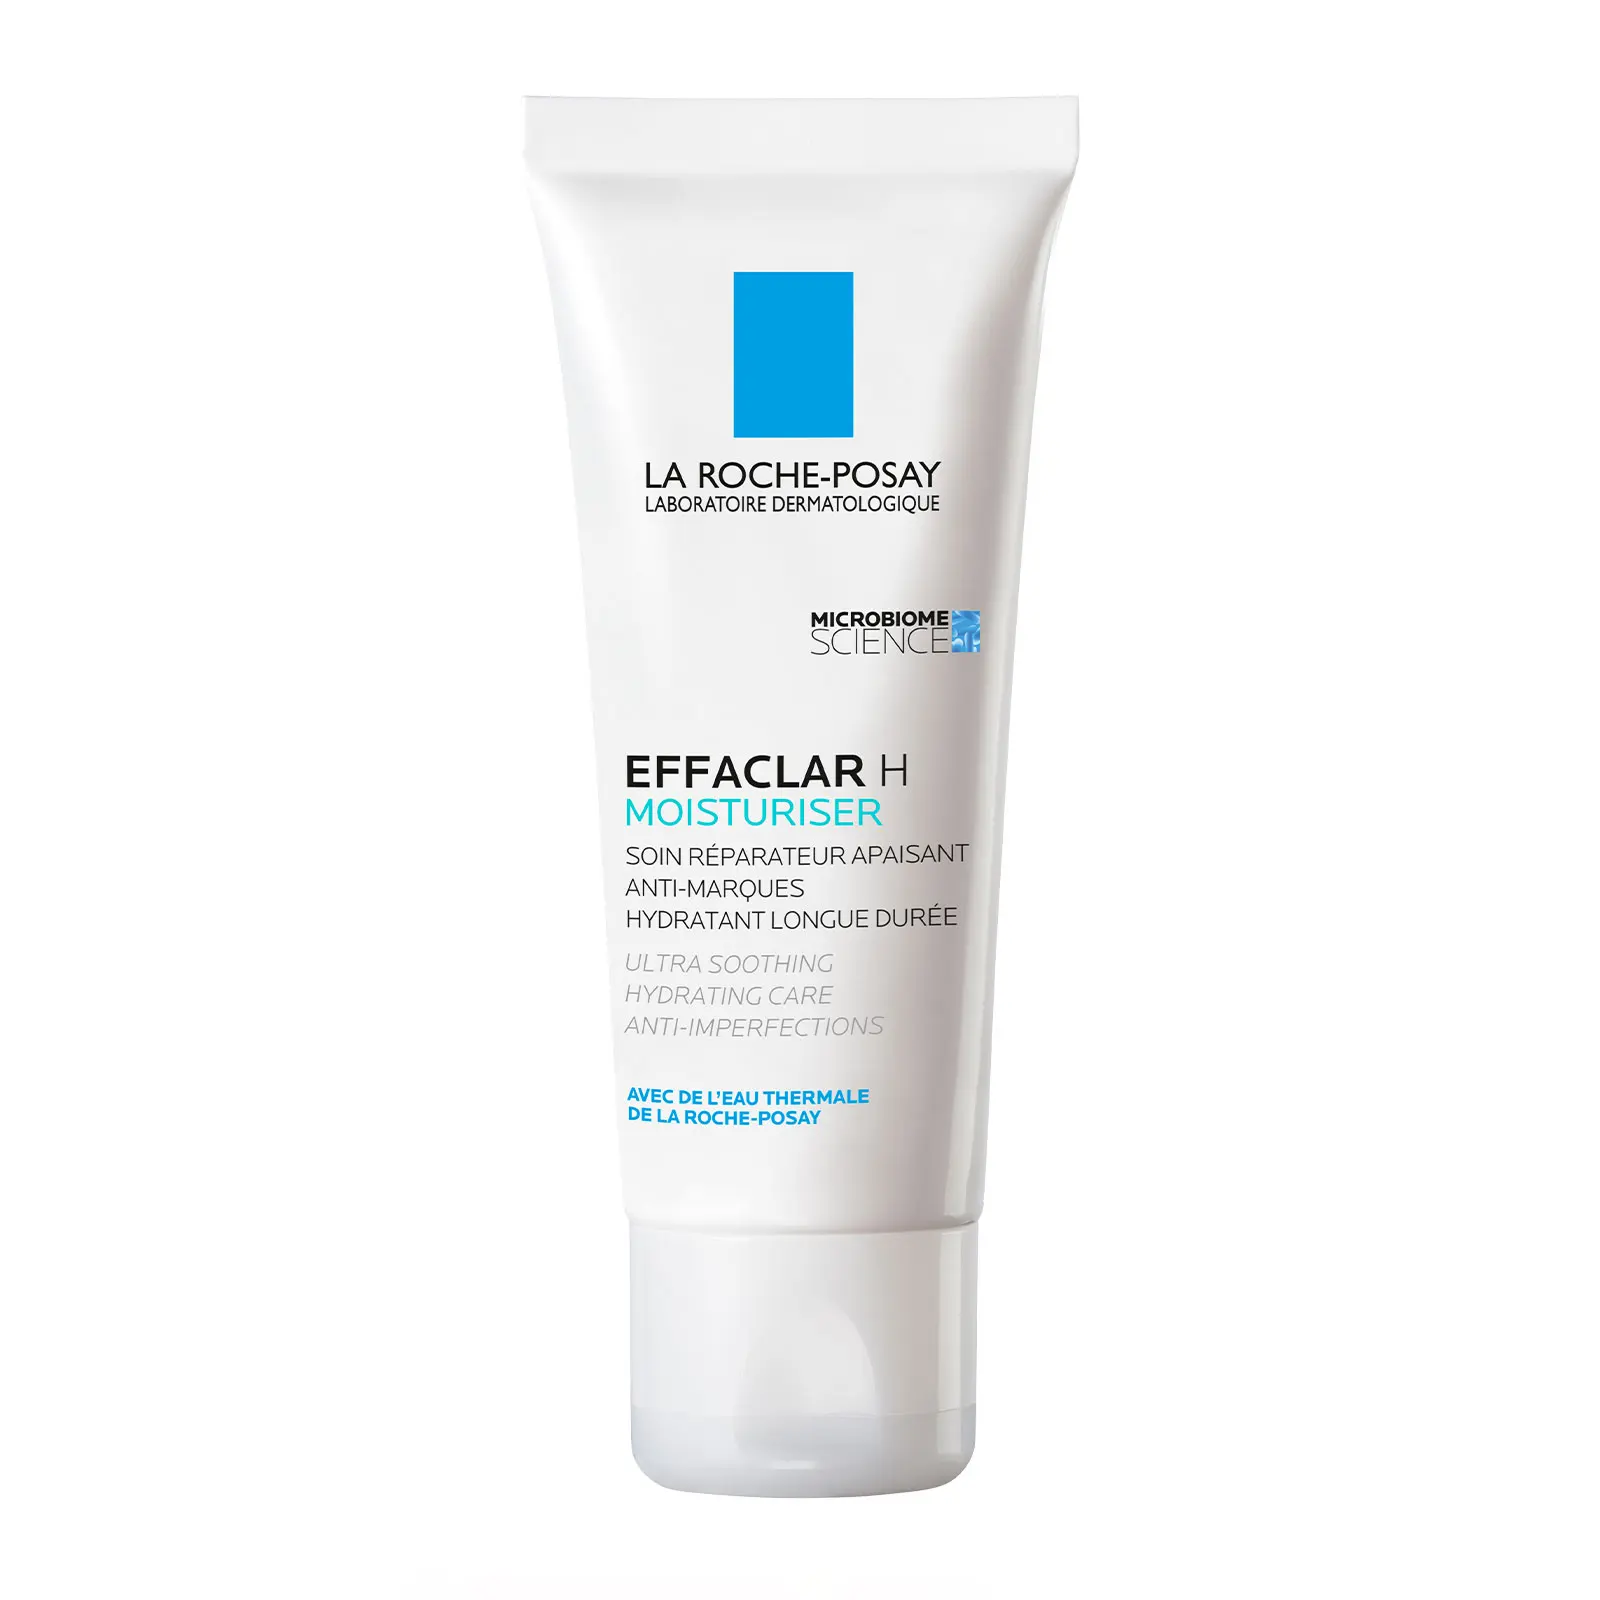 La Roche-Posay Effaclar H+ Moisturising Cream for Sensitive Blemish-Prone Skin Discounts and Cashback